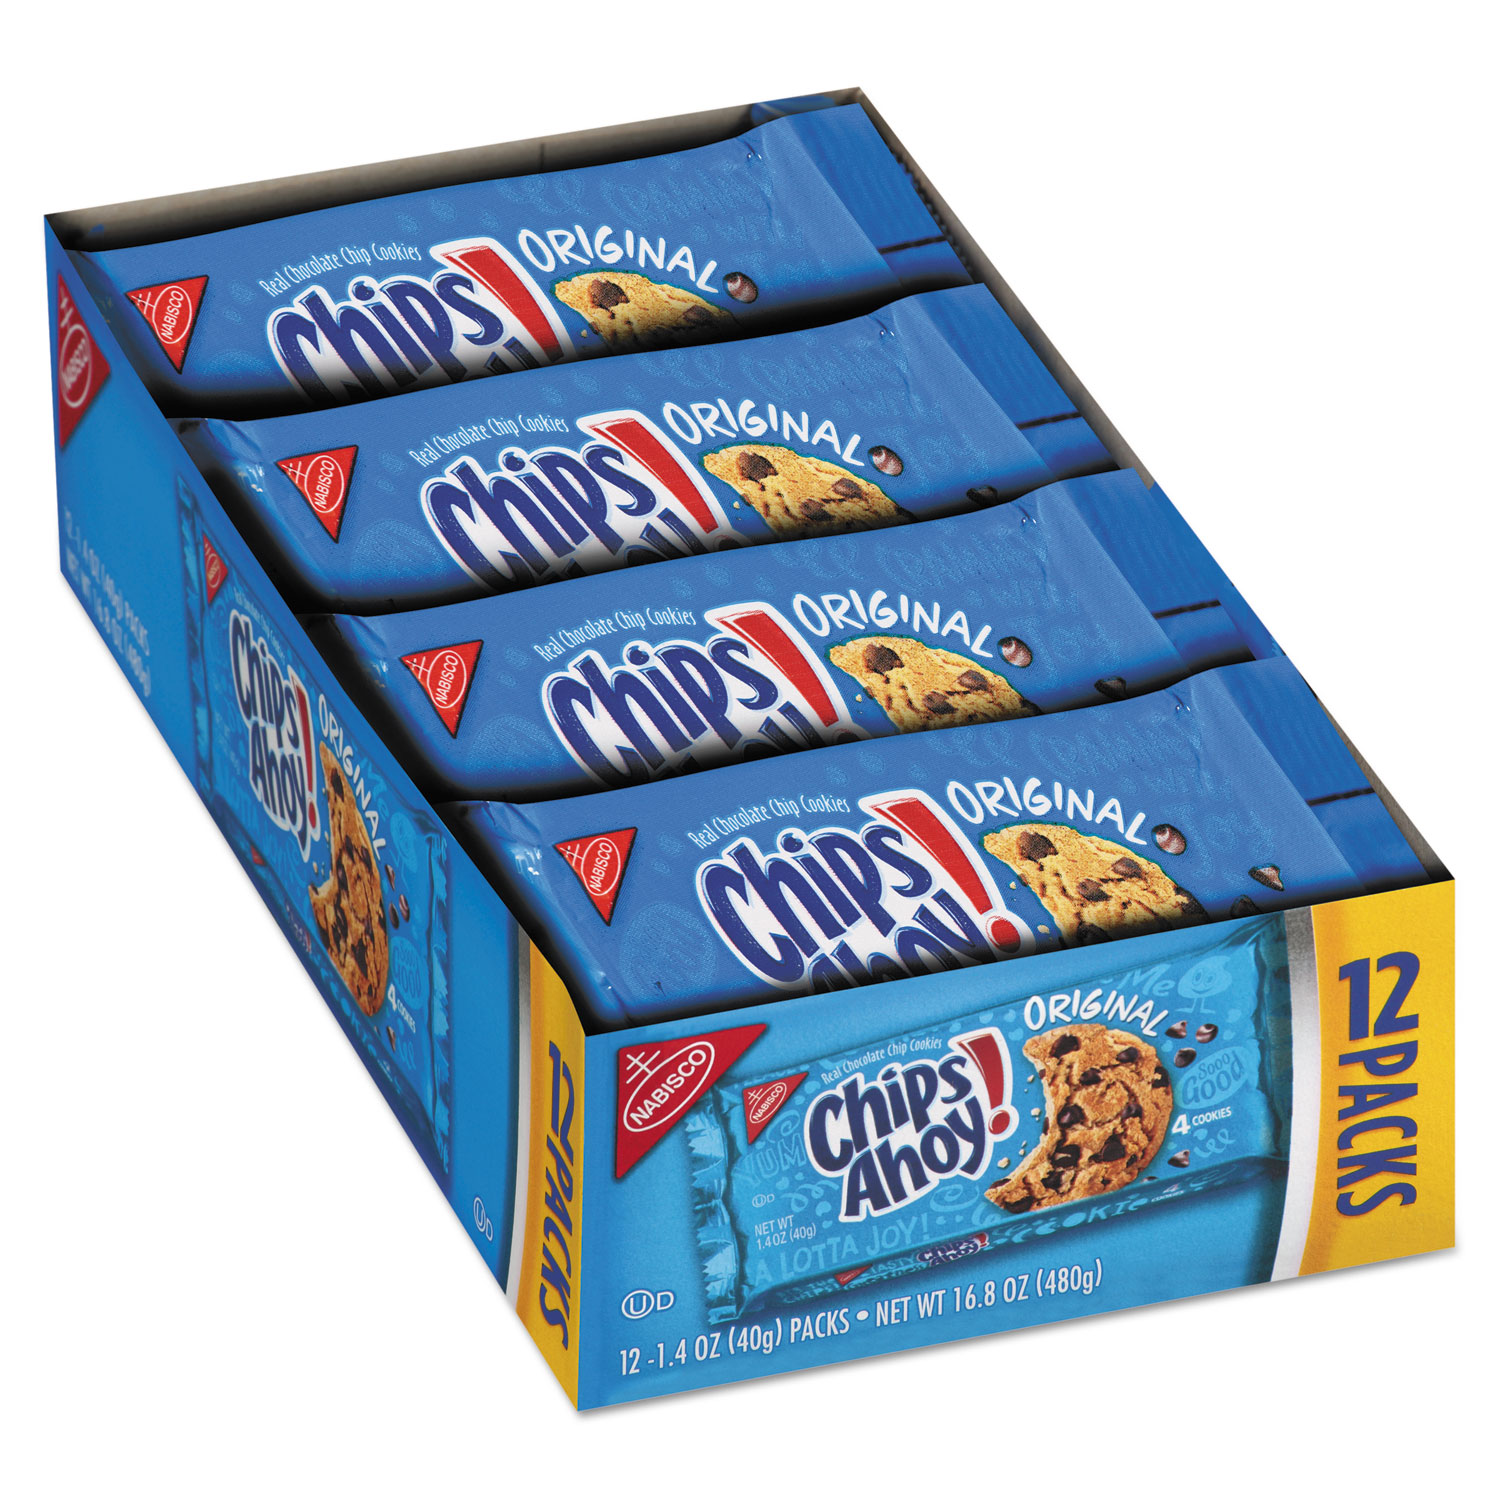  Nabisco 044000052220 Chips Ahoy Cookies, Chocolate Chip, 1.4 oz Pack (CDB52220) 